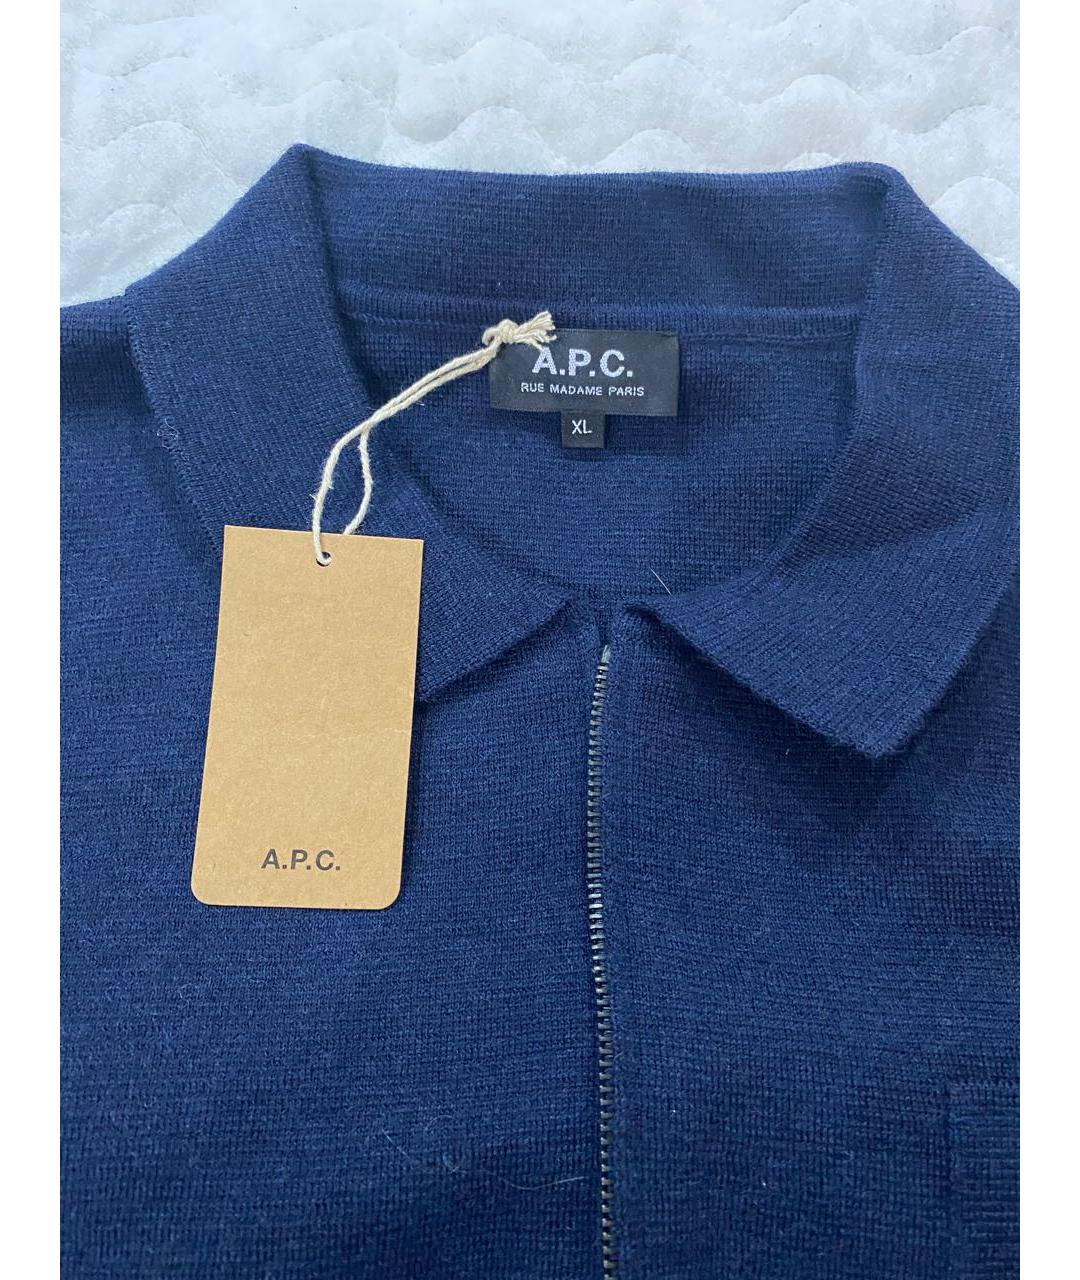 A.P.C. Синий шерстяной джемпер / свитер, фото 2